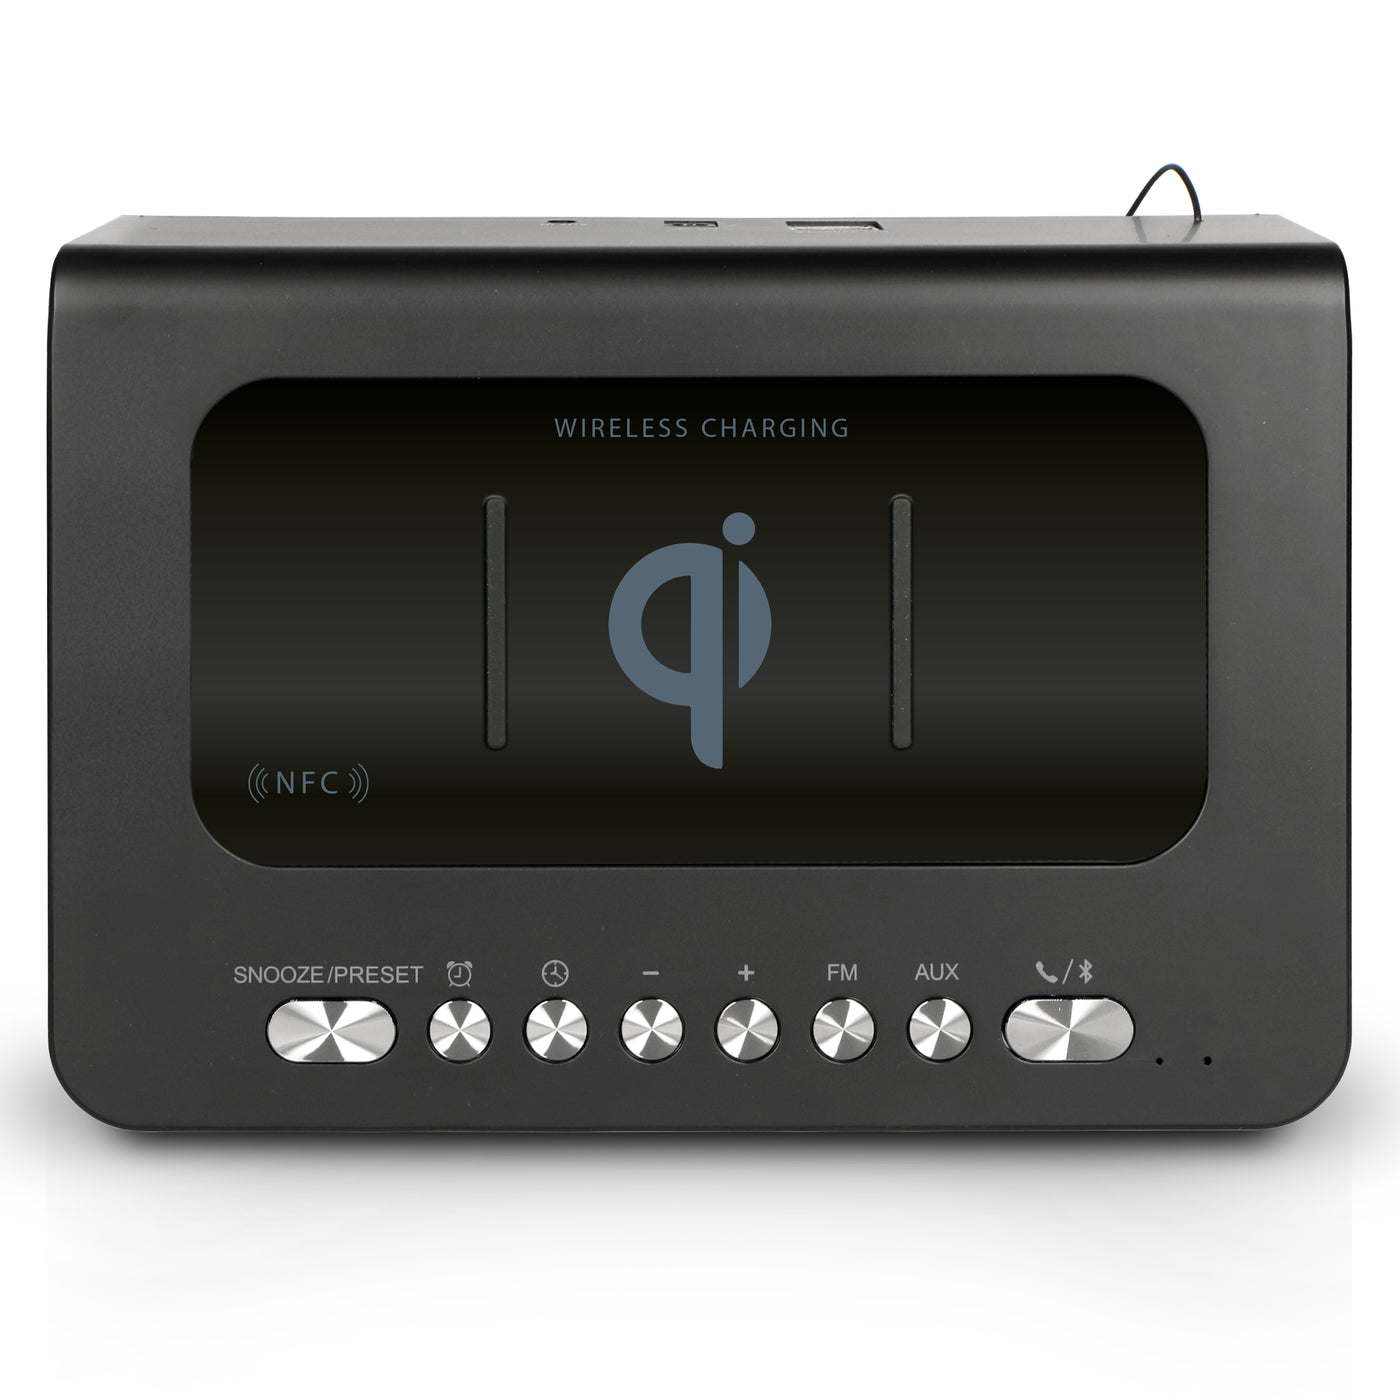 LENCO CR-580BK - Stereo FM Wekkerradio Bluetooth®, USB en draadloze QI oplader - Zwart